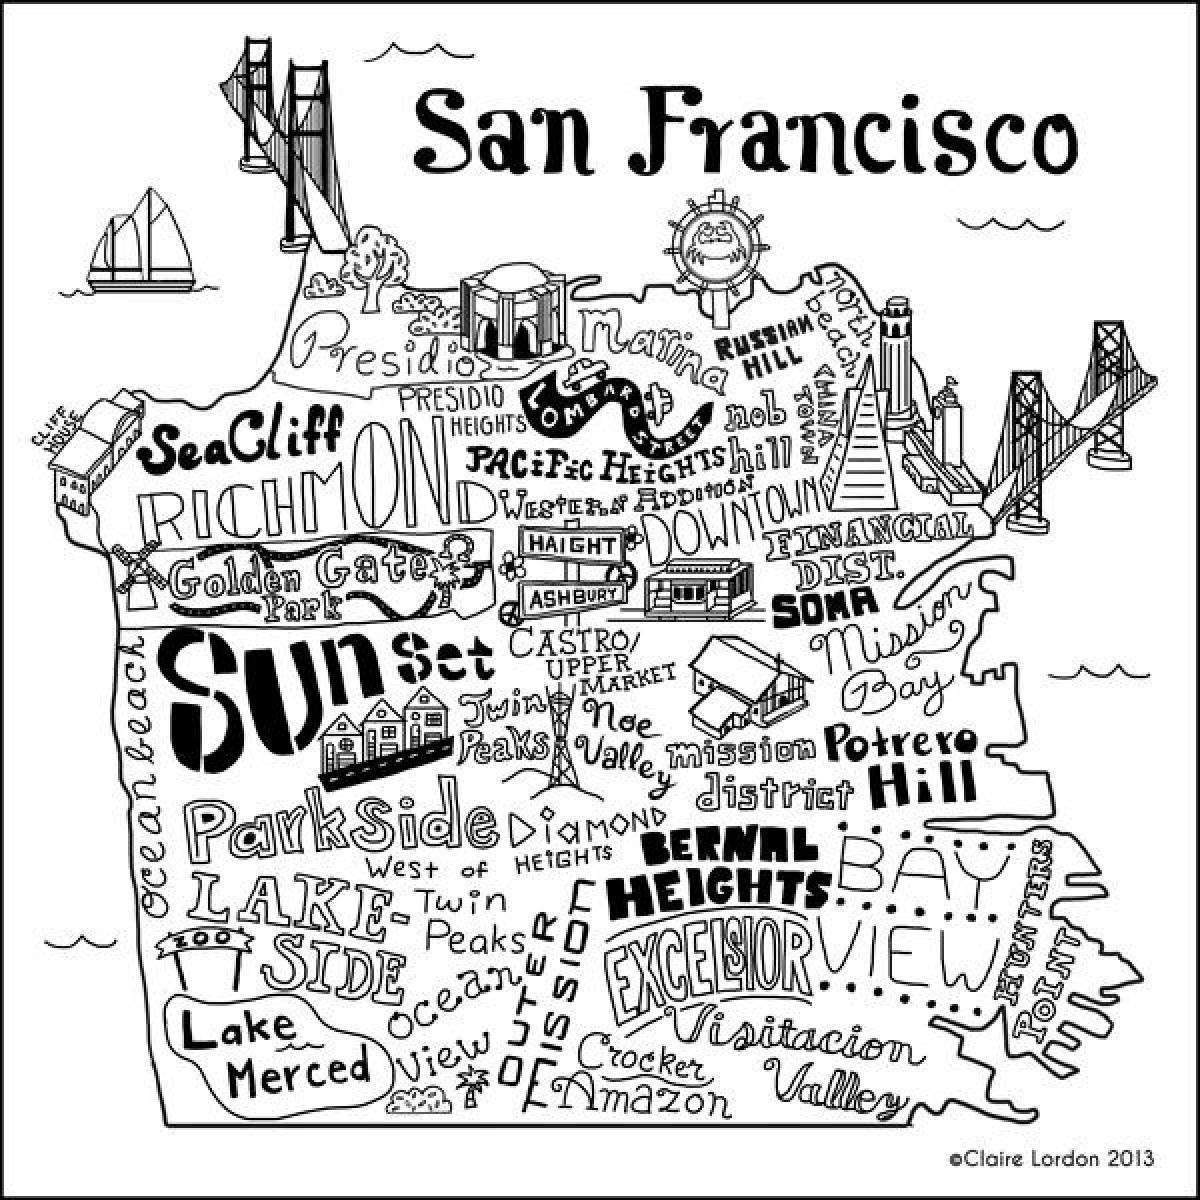 Kort over butikken San Francisco